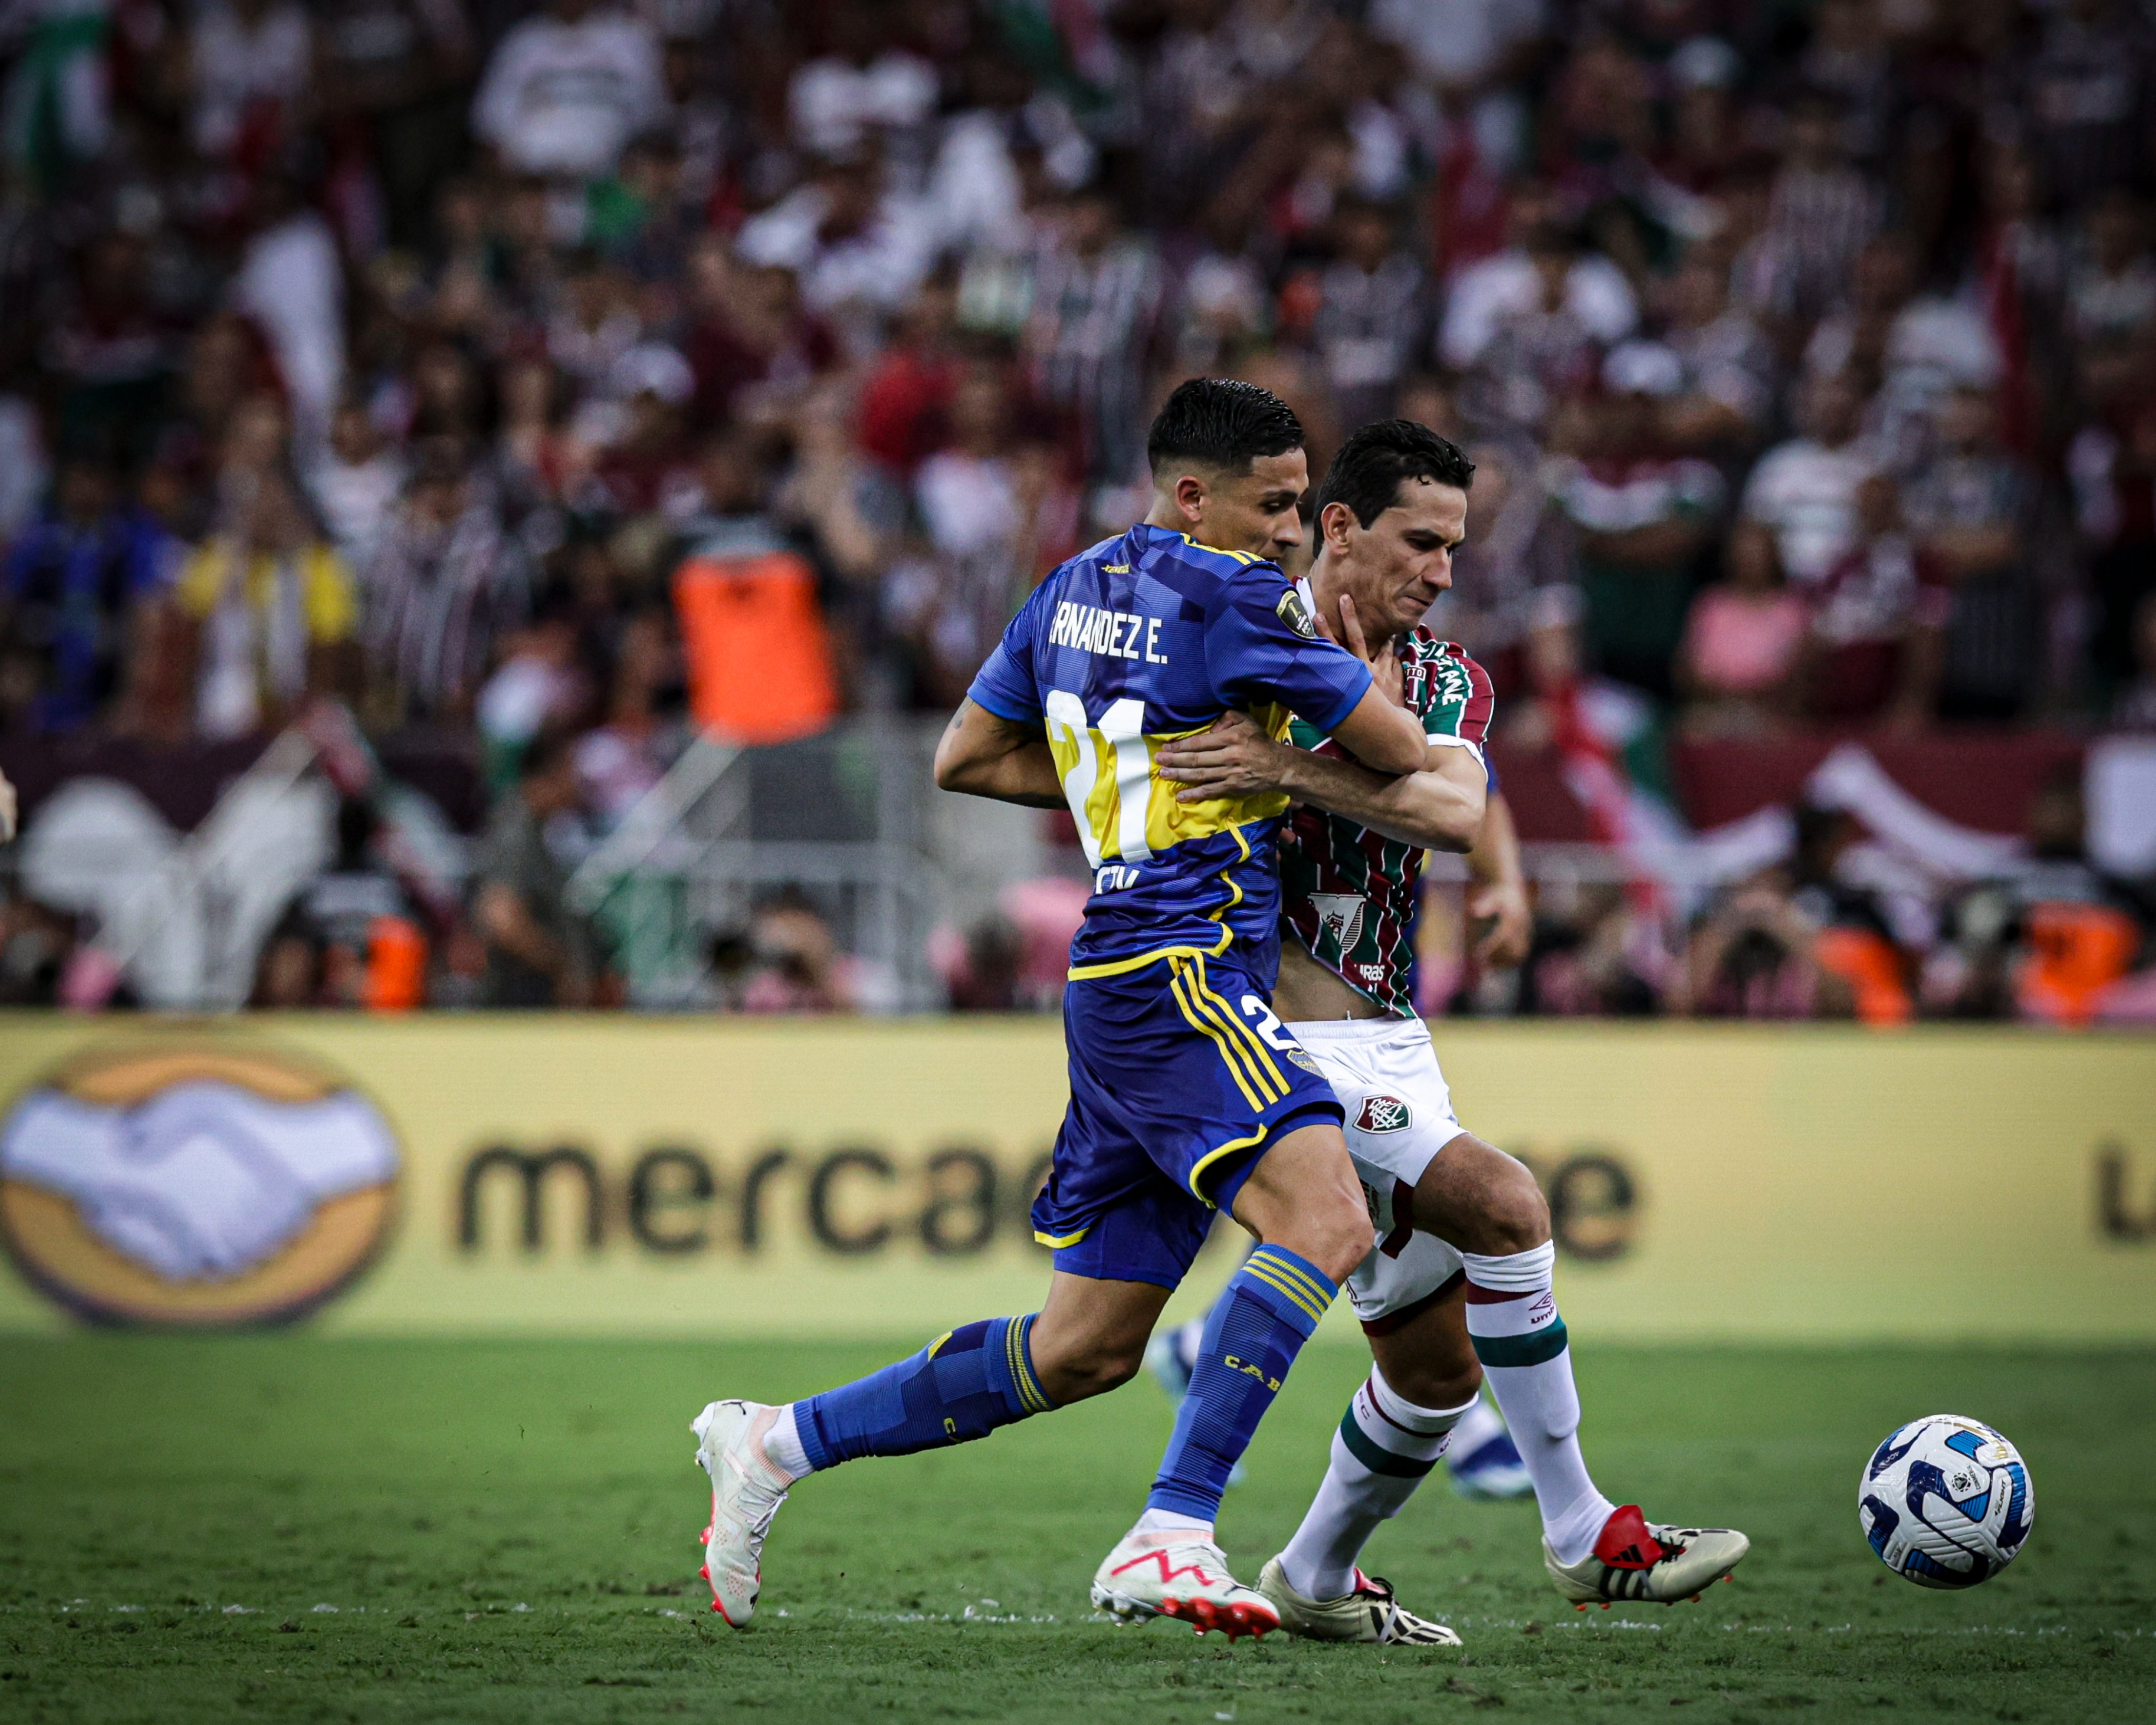 No pudo ser para Boca: Fluminense campeón de la Copa Libertadores | Canal Showsport